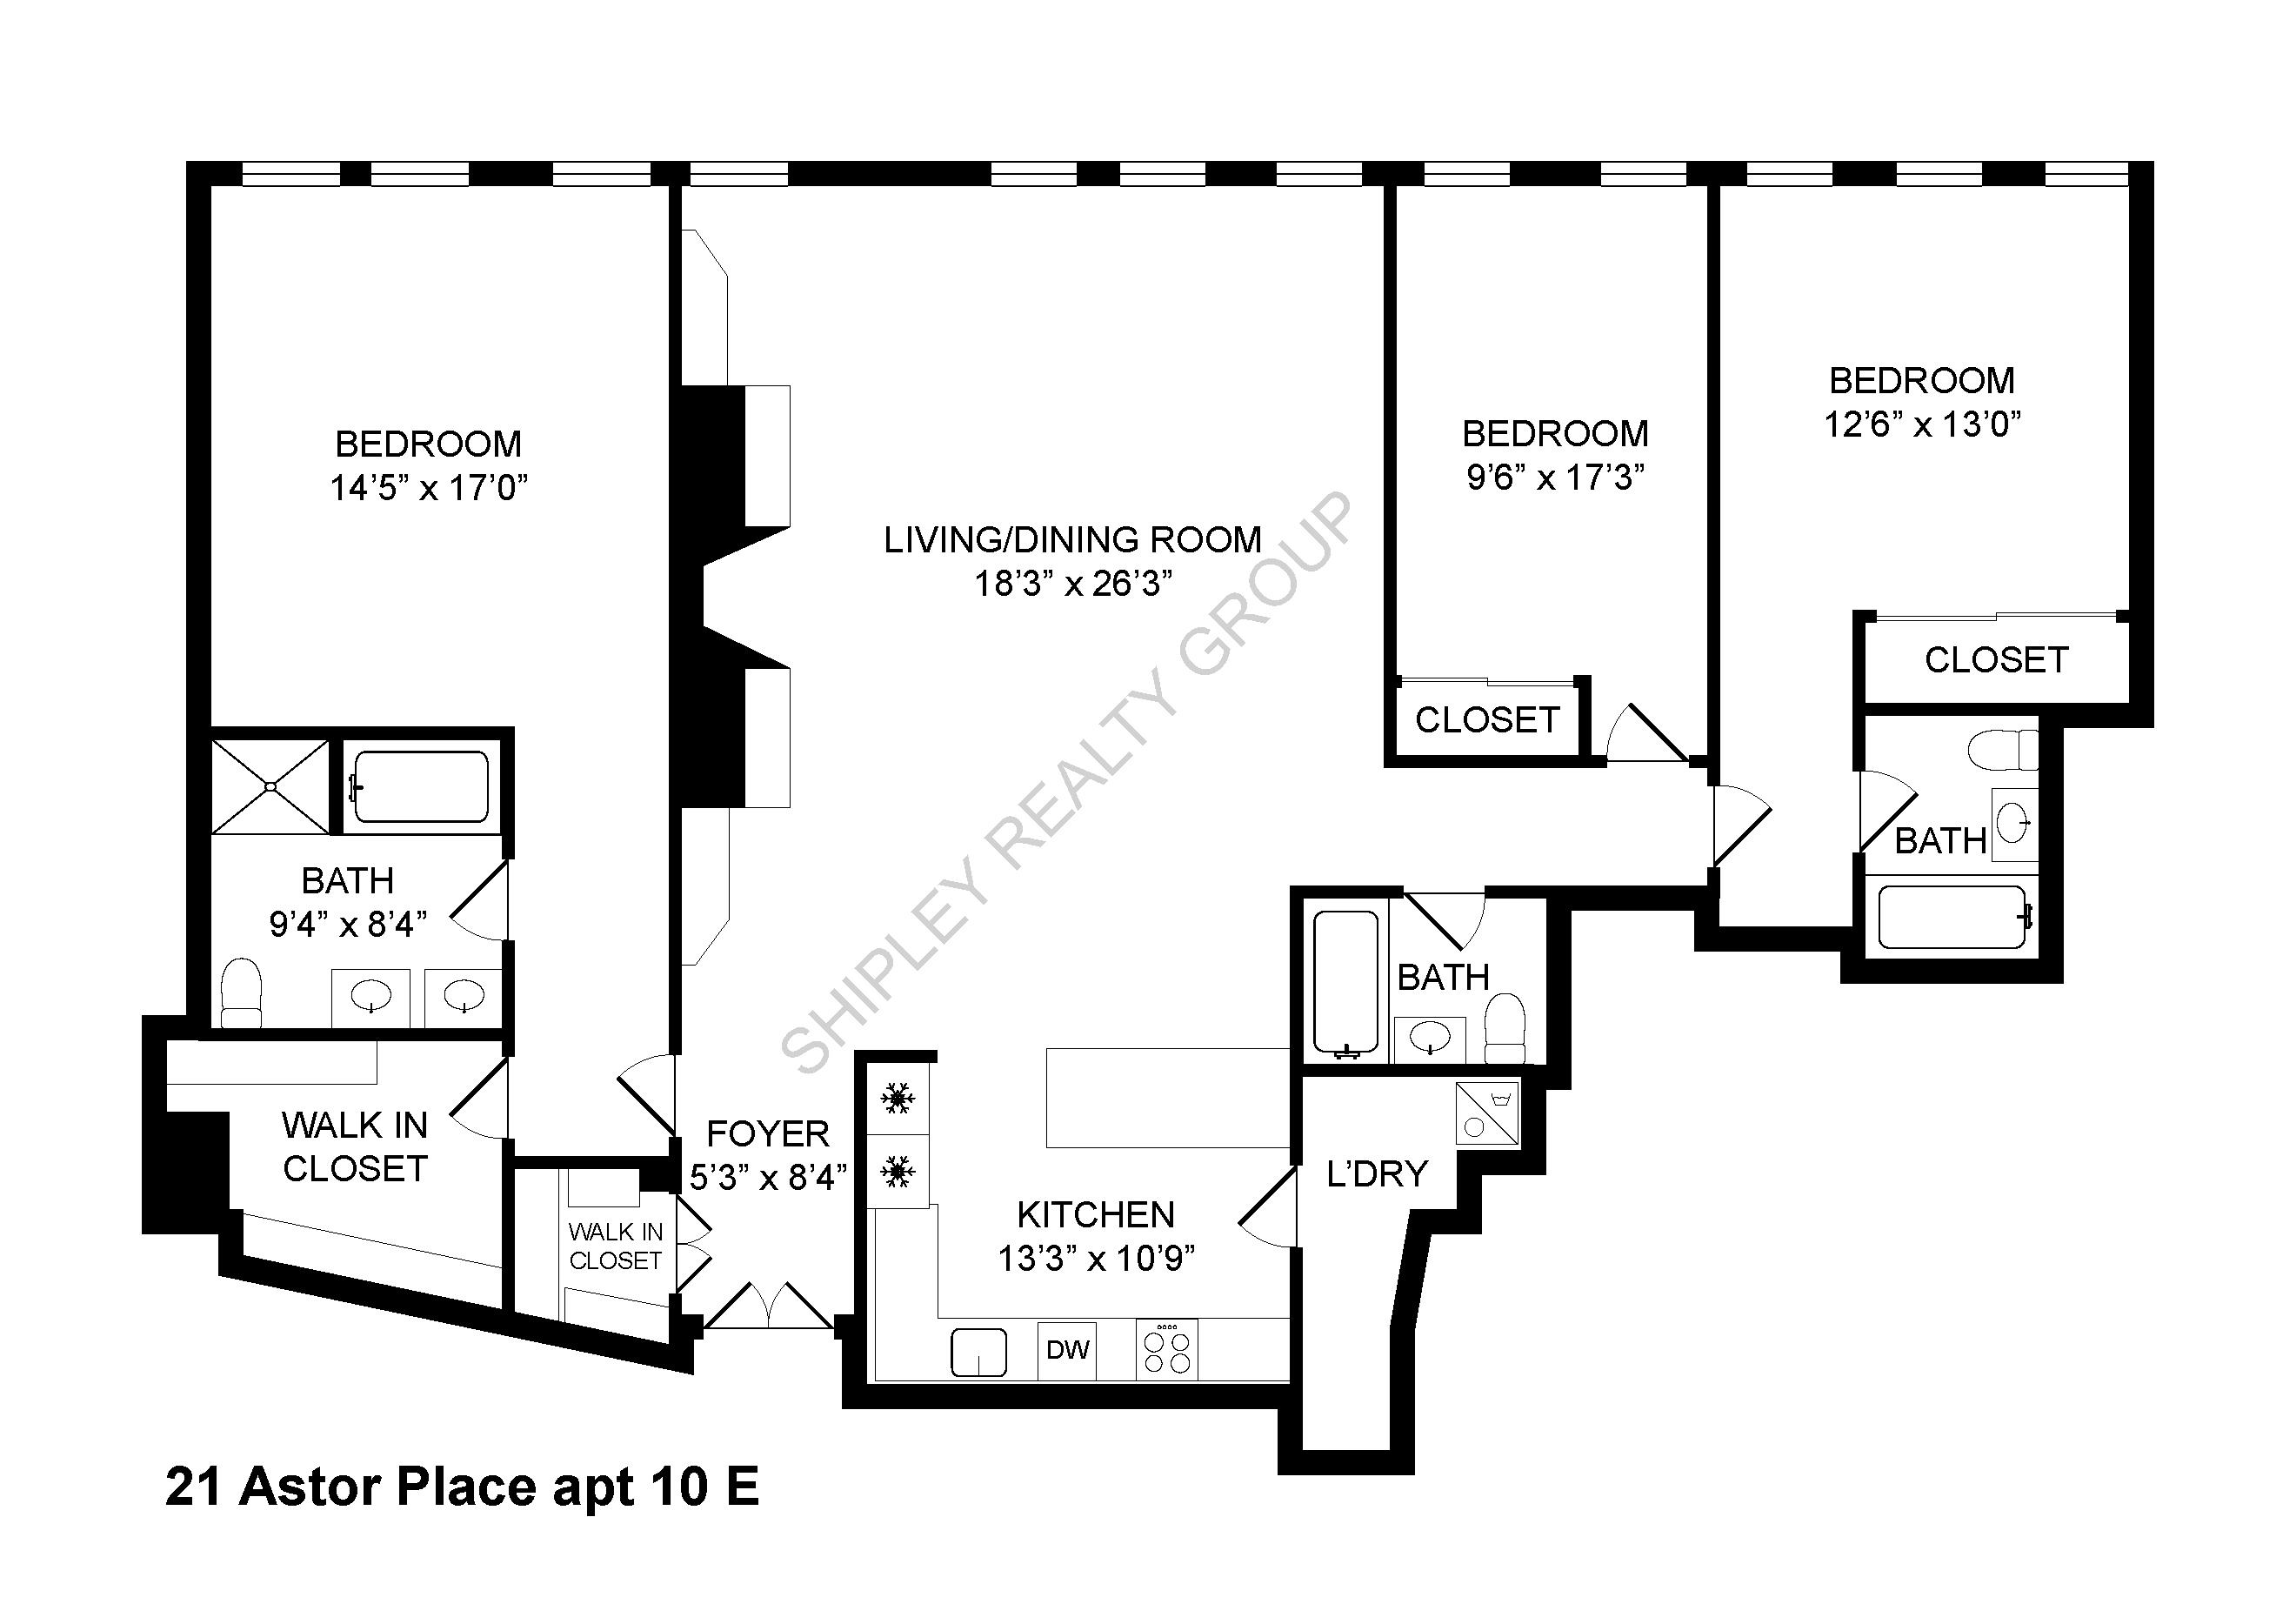 Floorplan for 21 Astor Place, 10-E